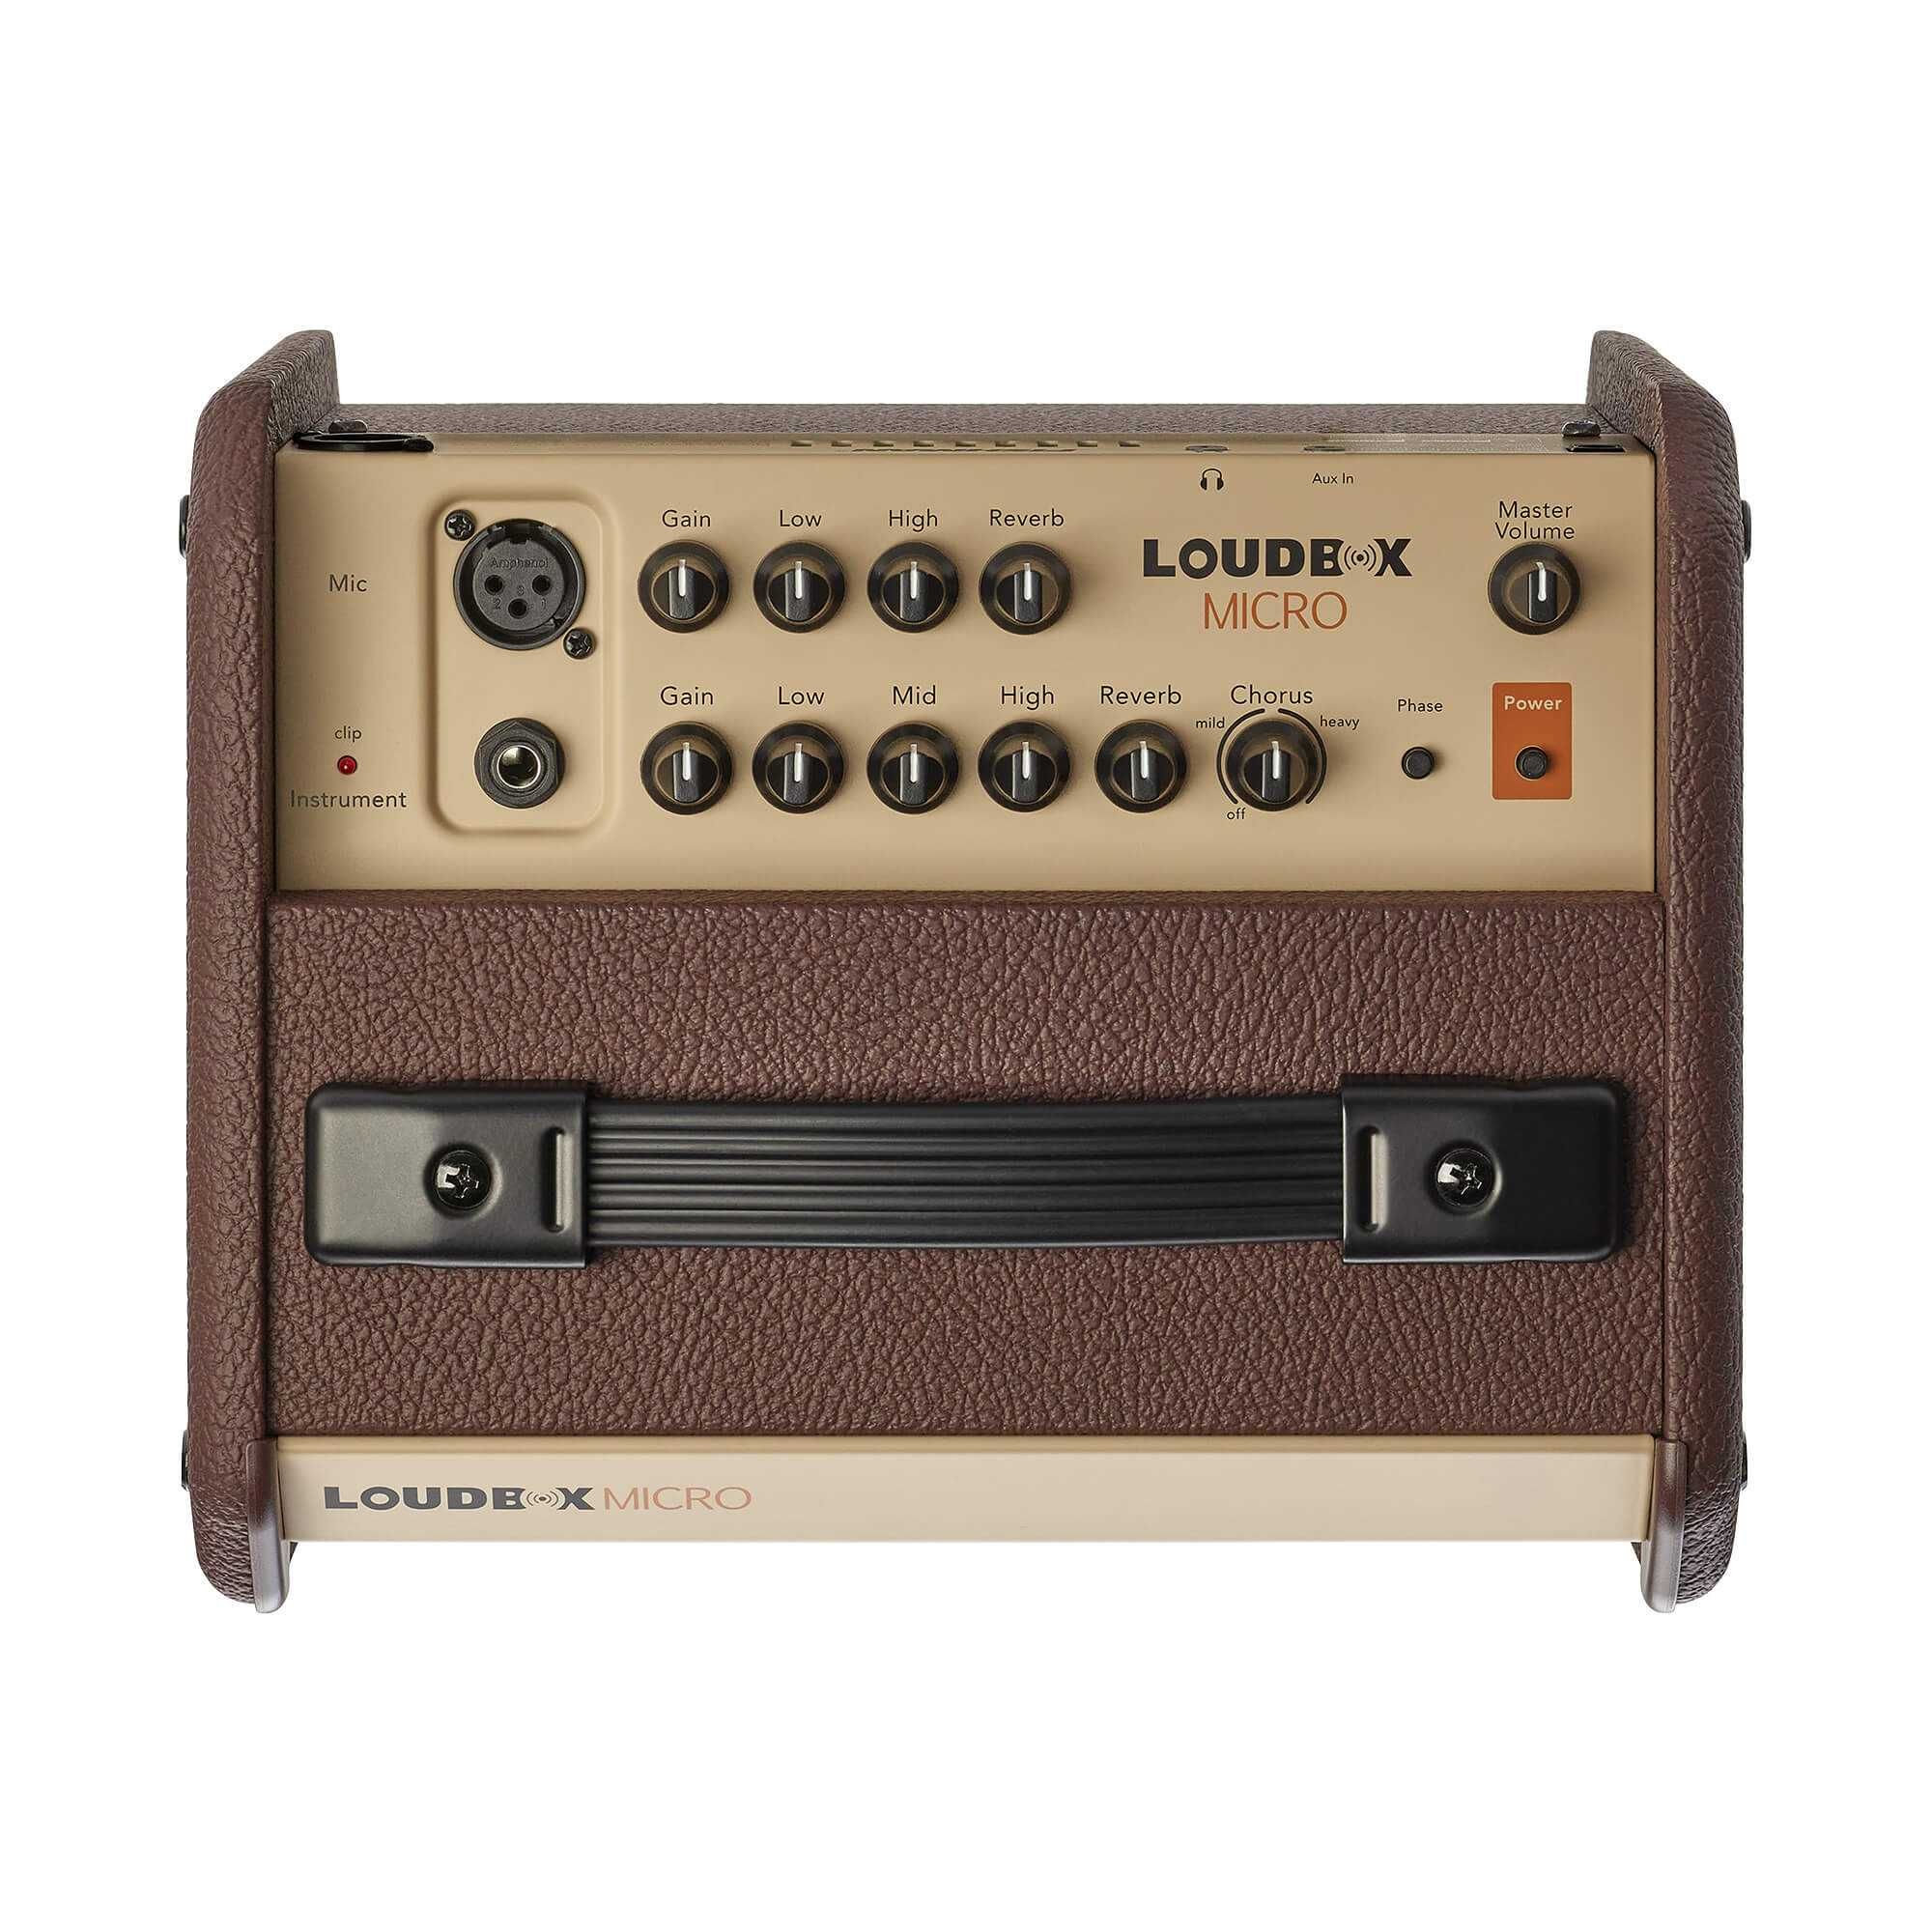 Nowe Combo Akustyczne Fishman Loudbox Micro PRO-LBT -EU4